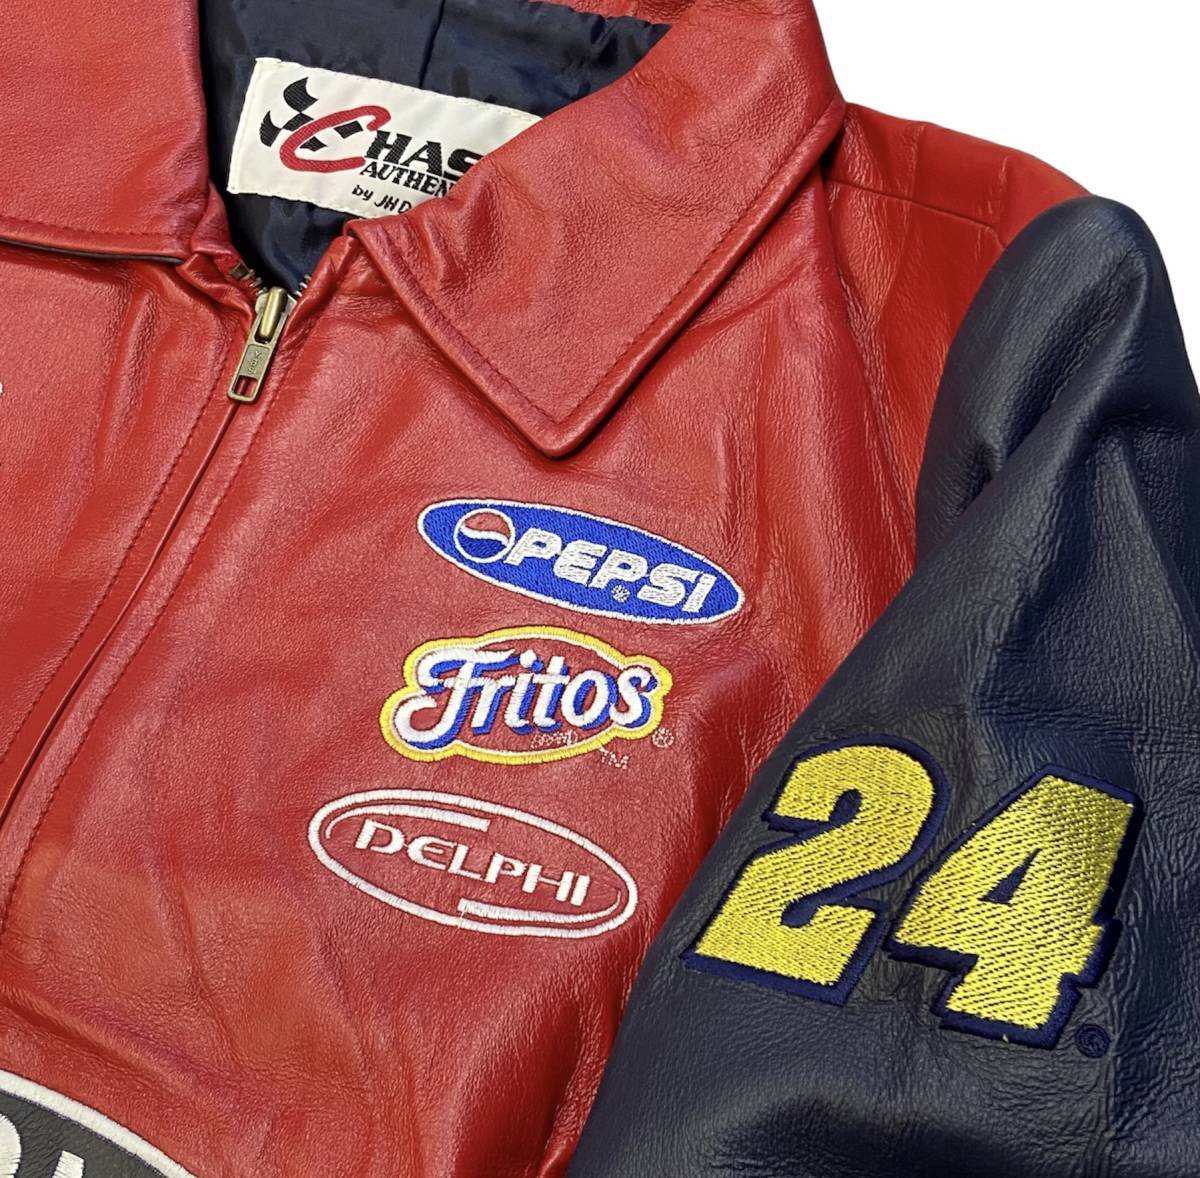 90s CHASE DUPONT レザー 本革 レーシング ジャケット XL 赤×紺 ファイヤーパターン NASCAR PEPSI JH DESIGN  ジェフハミルトン 企業 刺繍